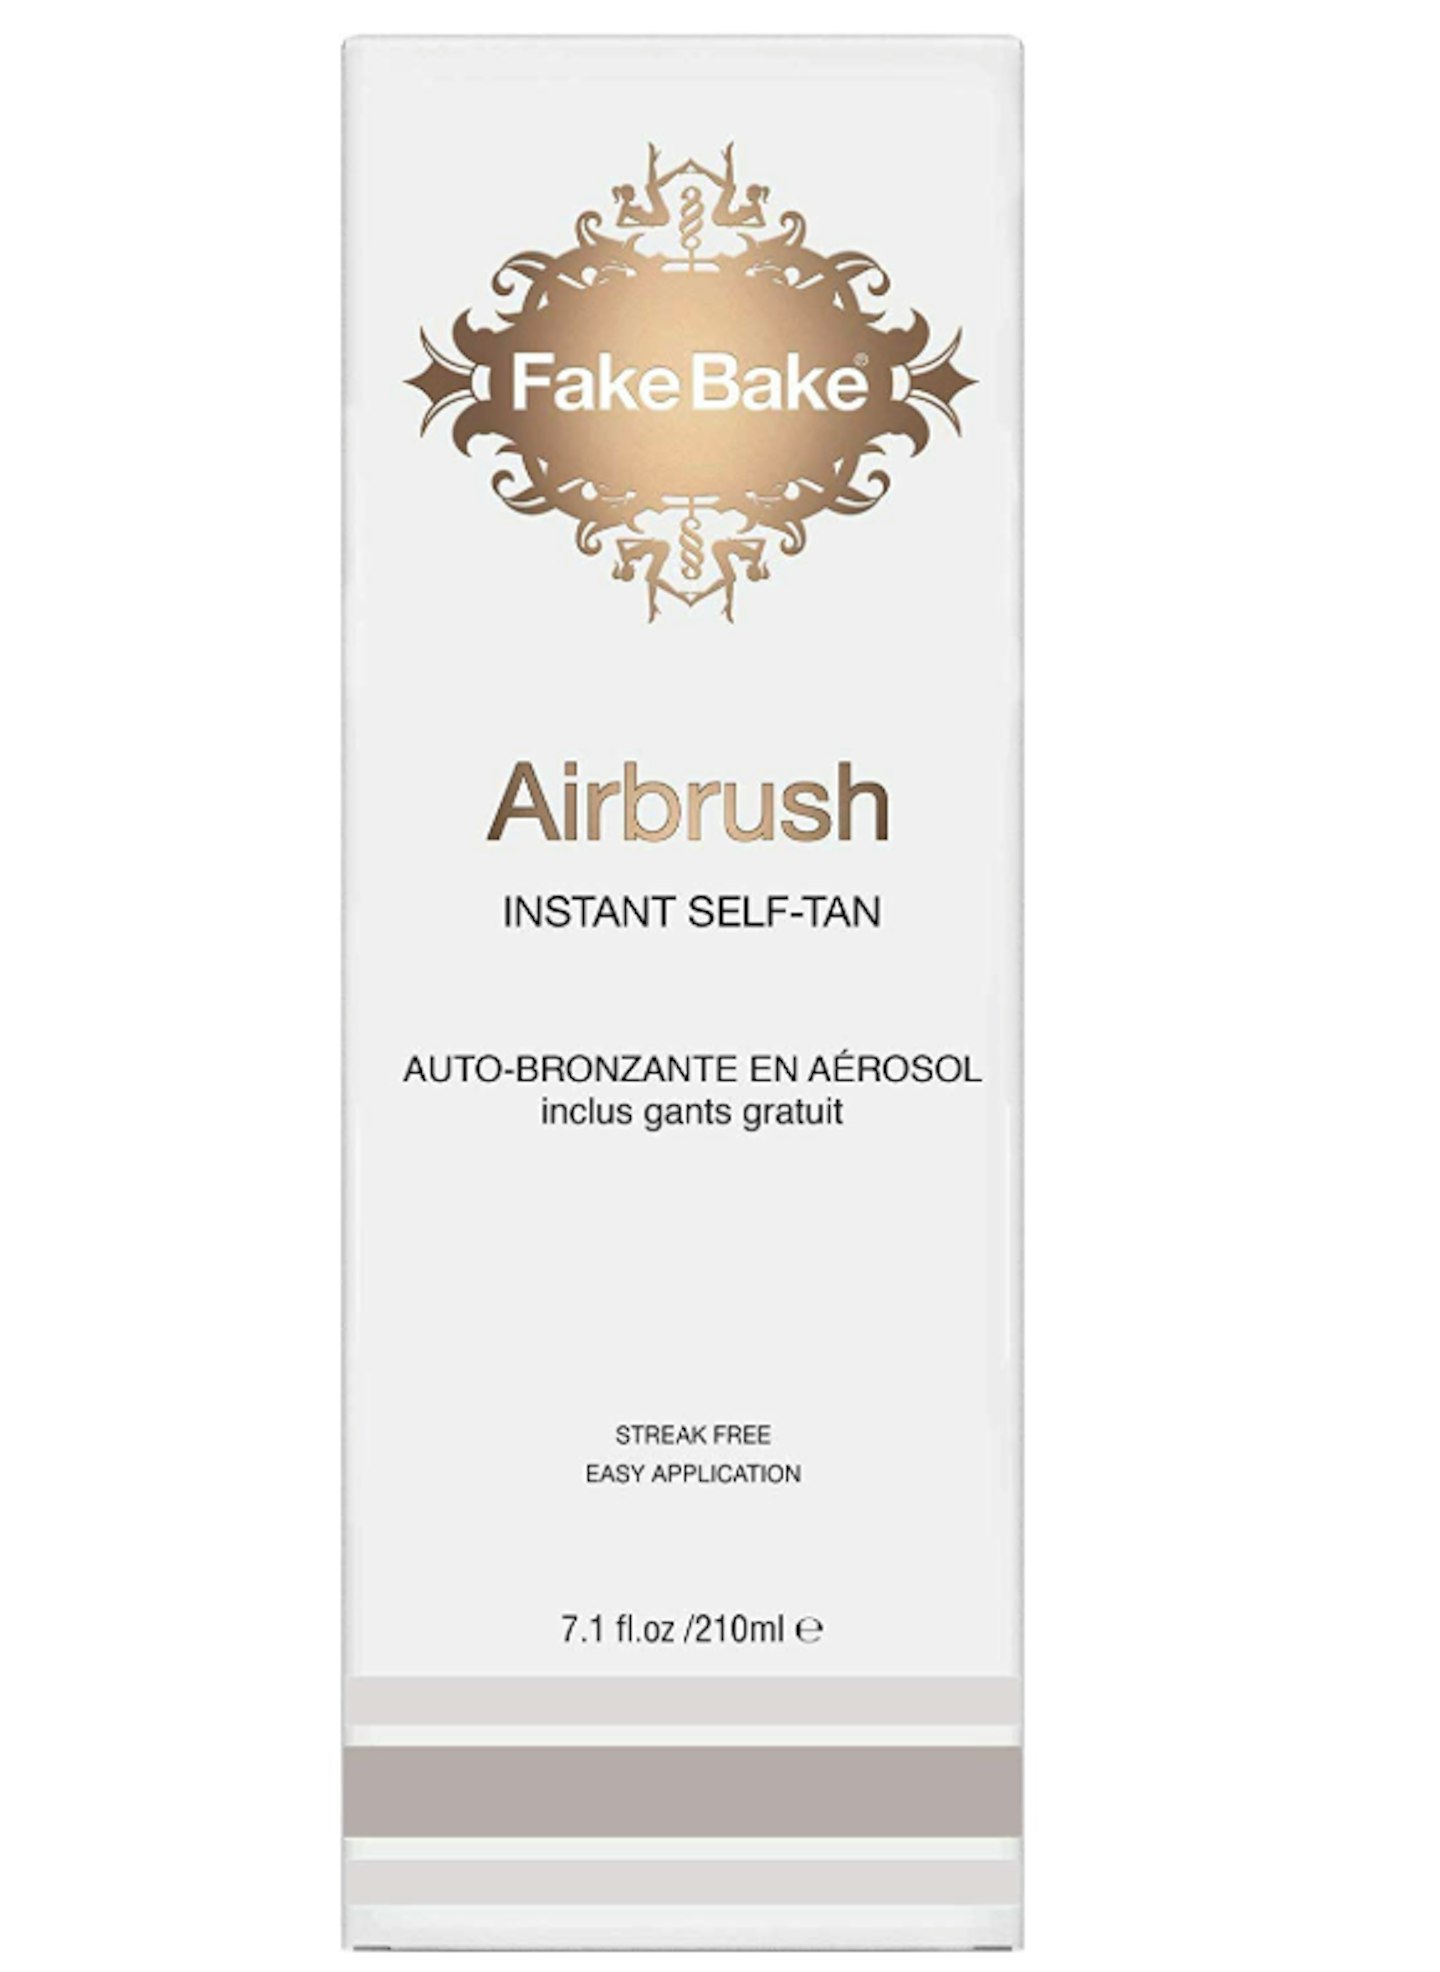 Fake Bake Airbrush Instant Self Tan, 210ml, Amazon